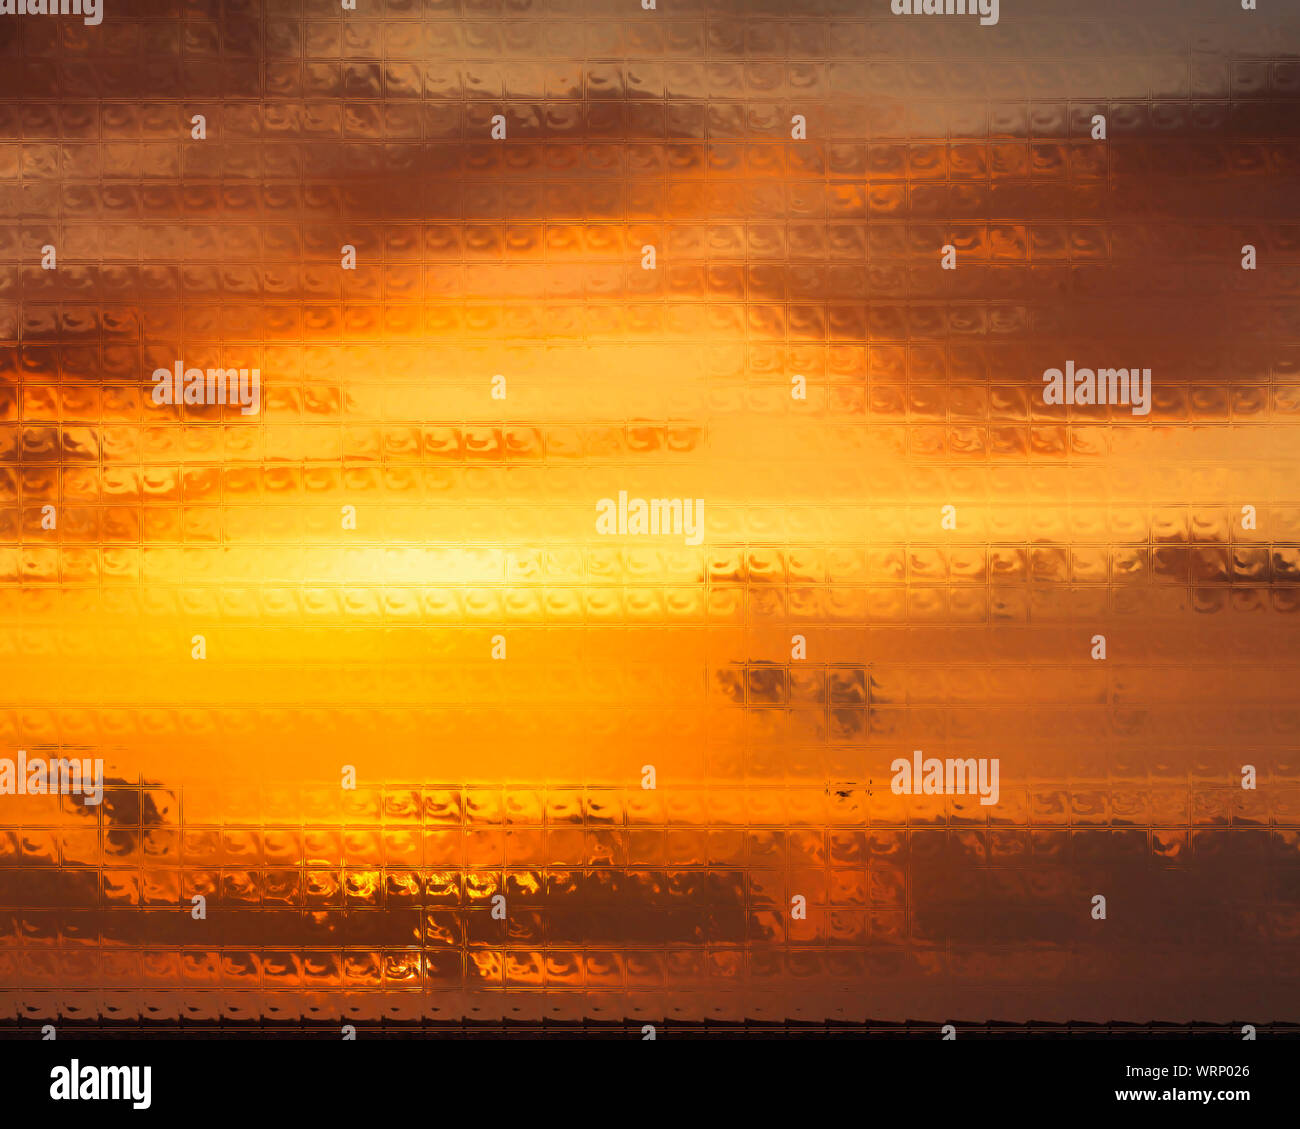 Sunset overlay background texture wallpaper screensaver design Stock Photo